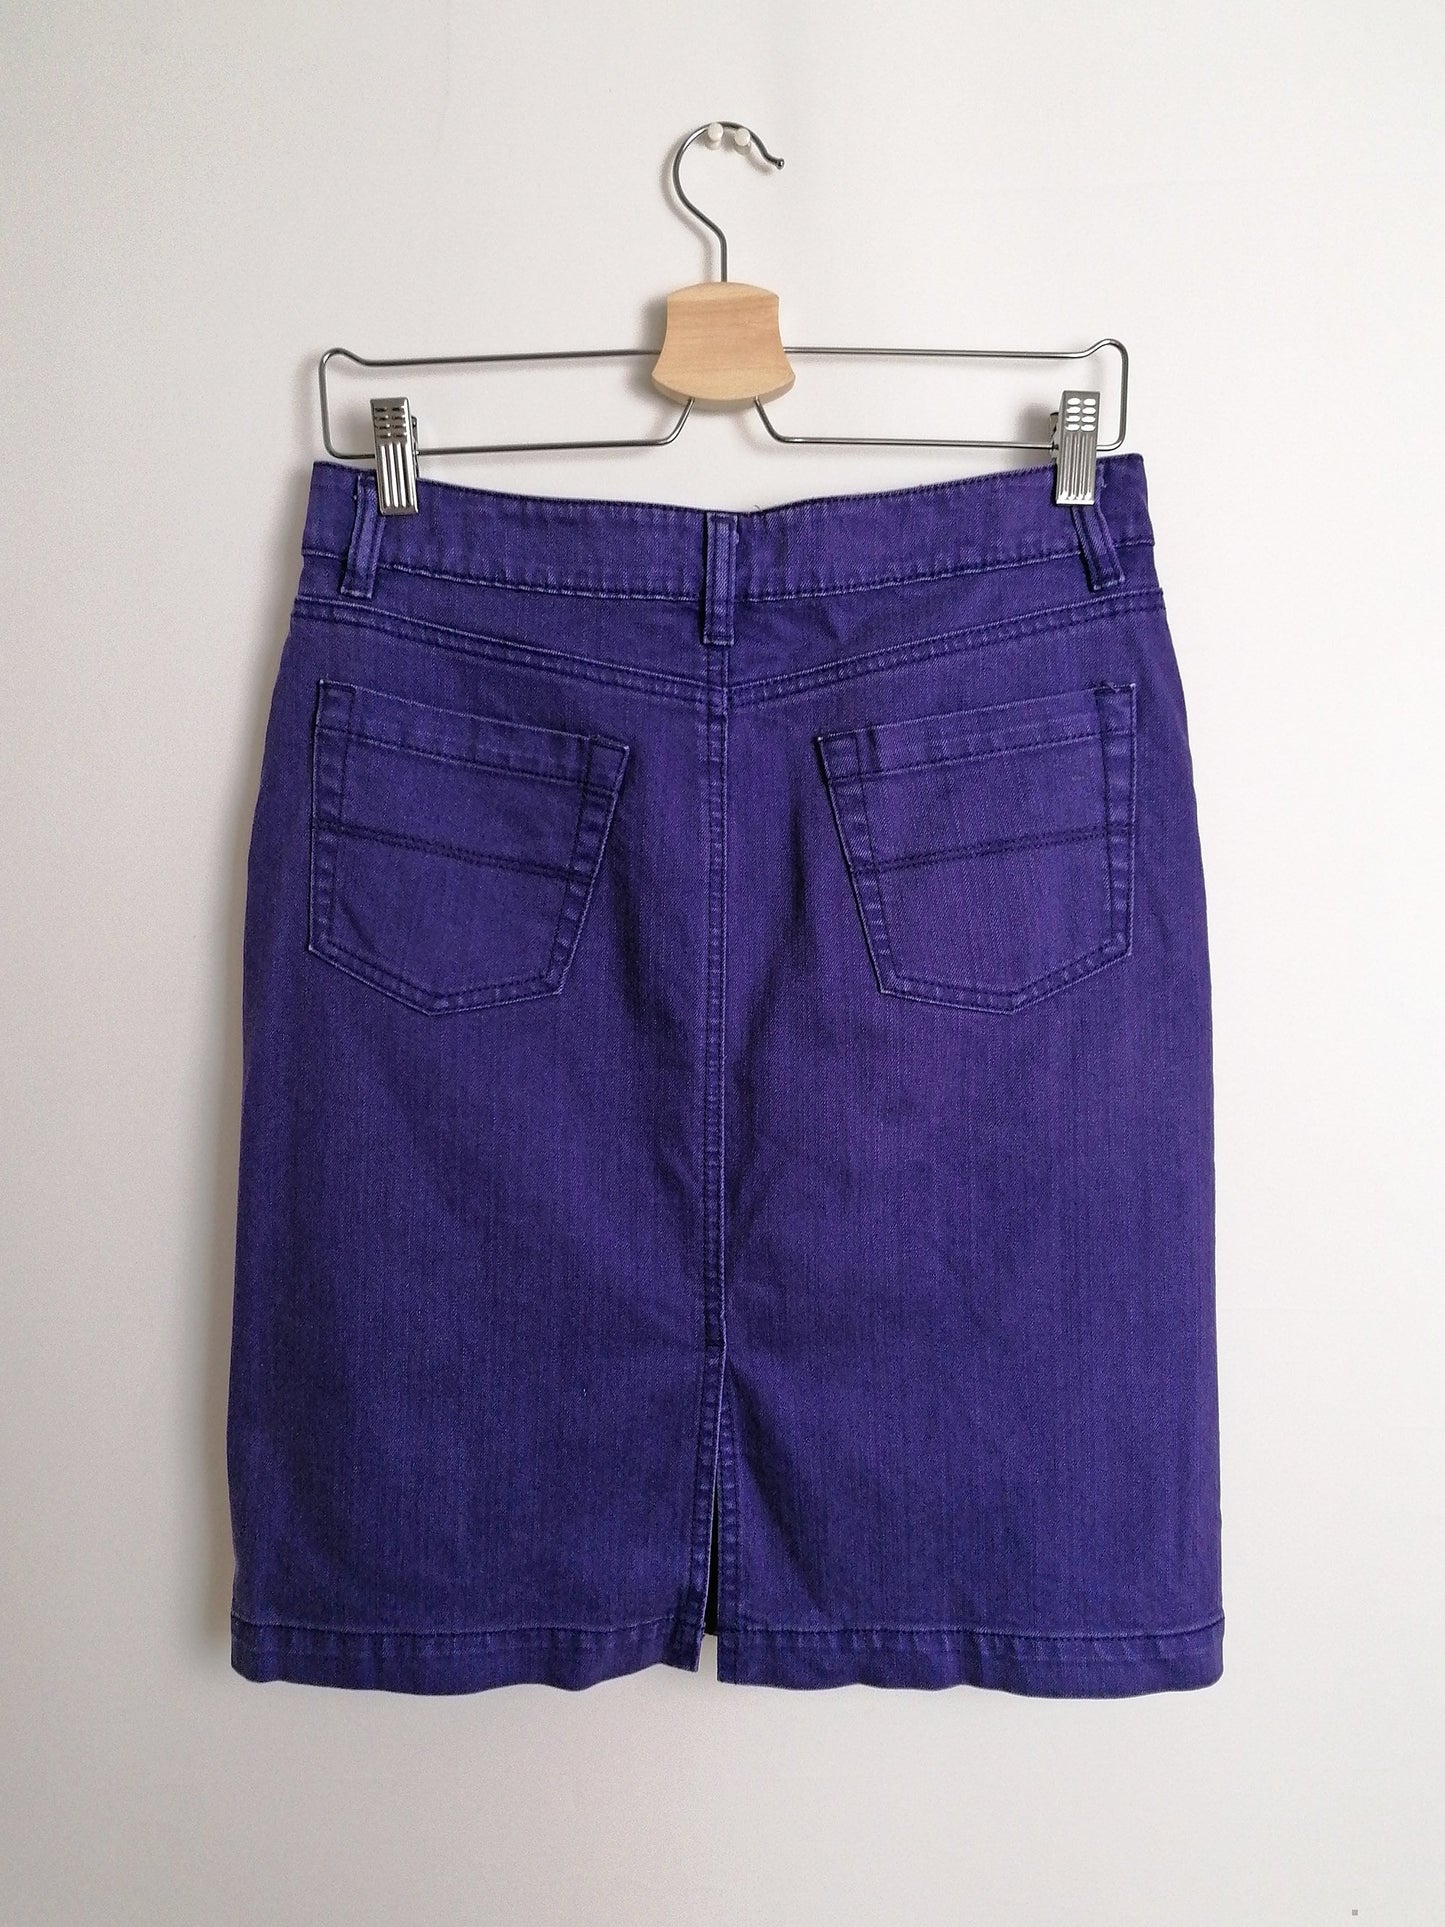 Y2K Purple Denim Pencil Skirt - size M - UK 12